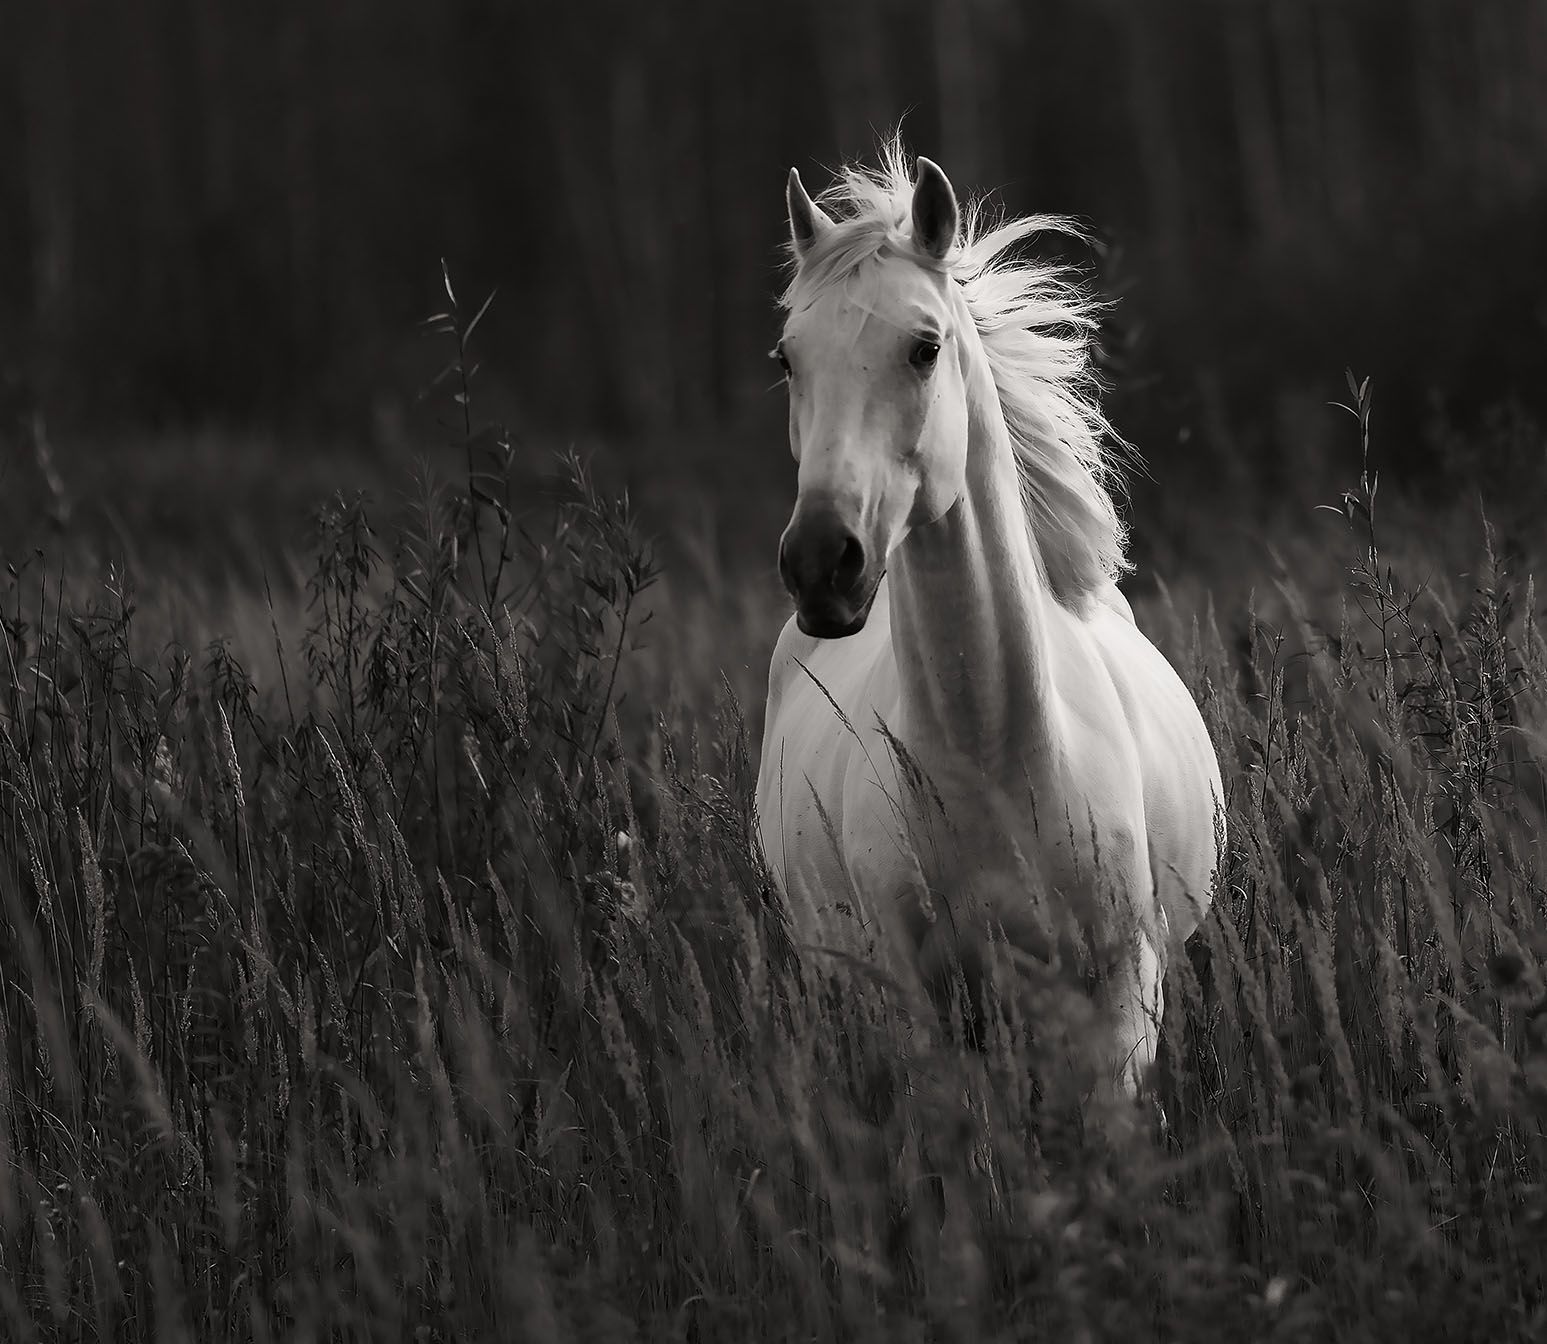 лошадь, рысак,осень поле,природа, красота, horse, animal, beautiful, autumn,field, nature, Yulia Stukalova